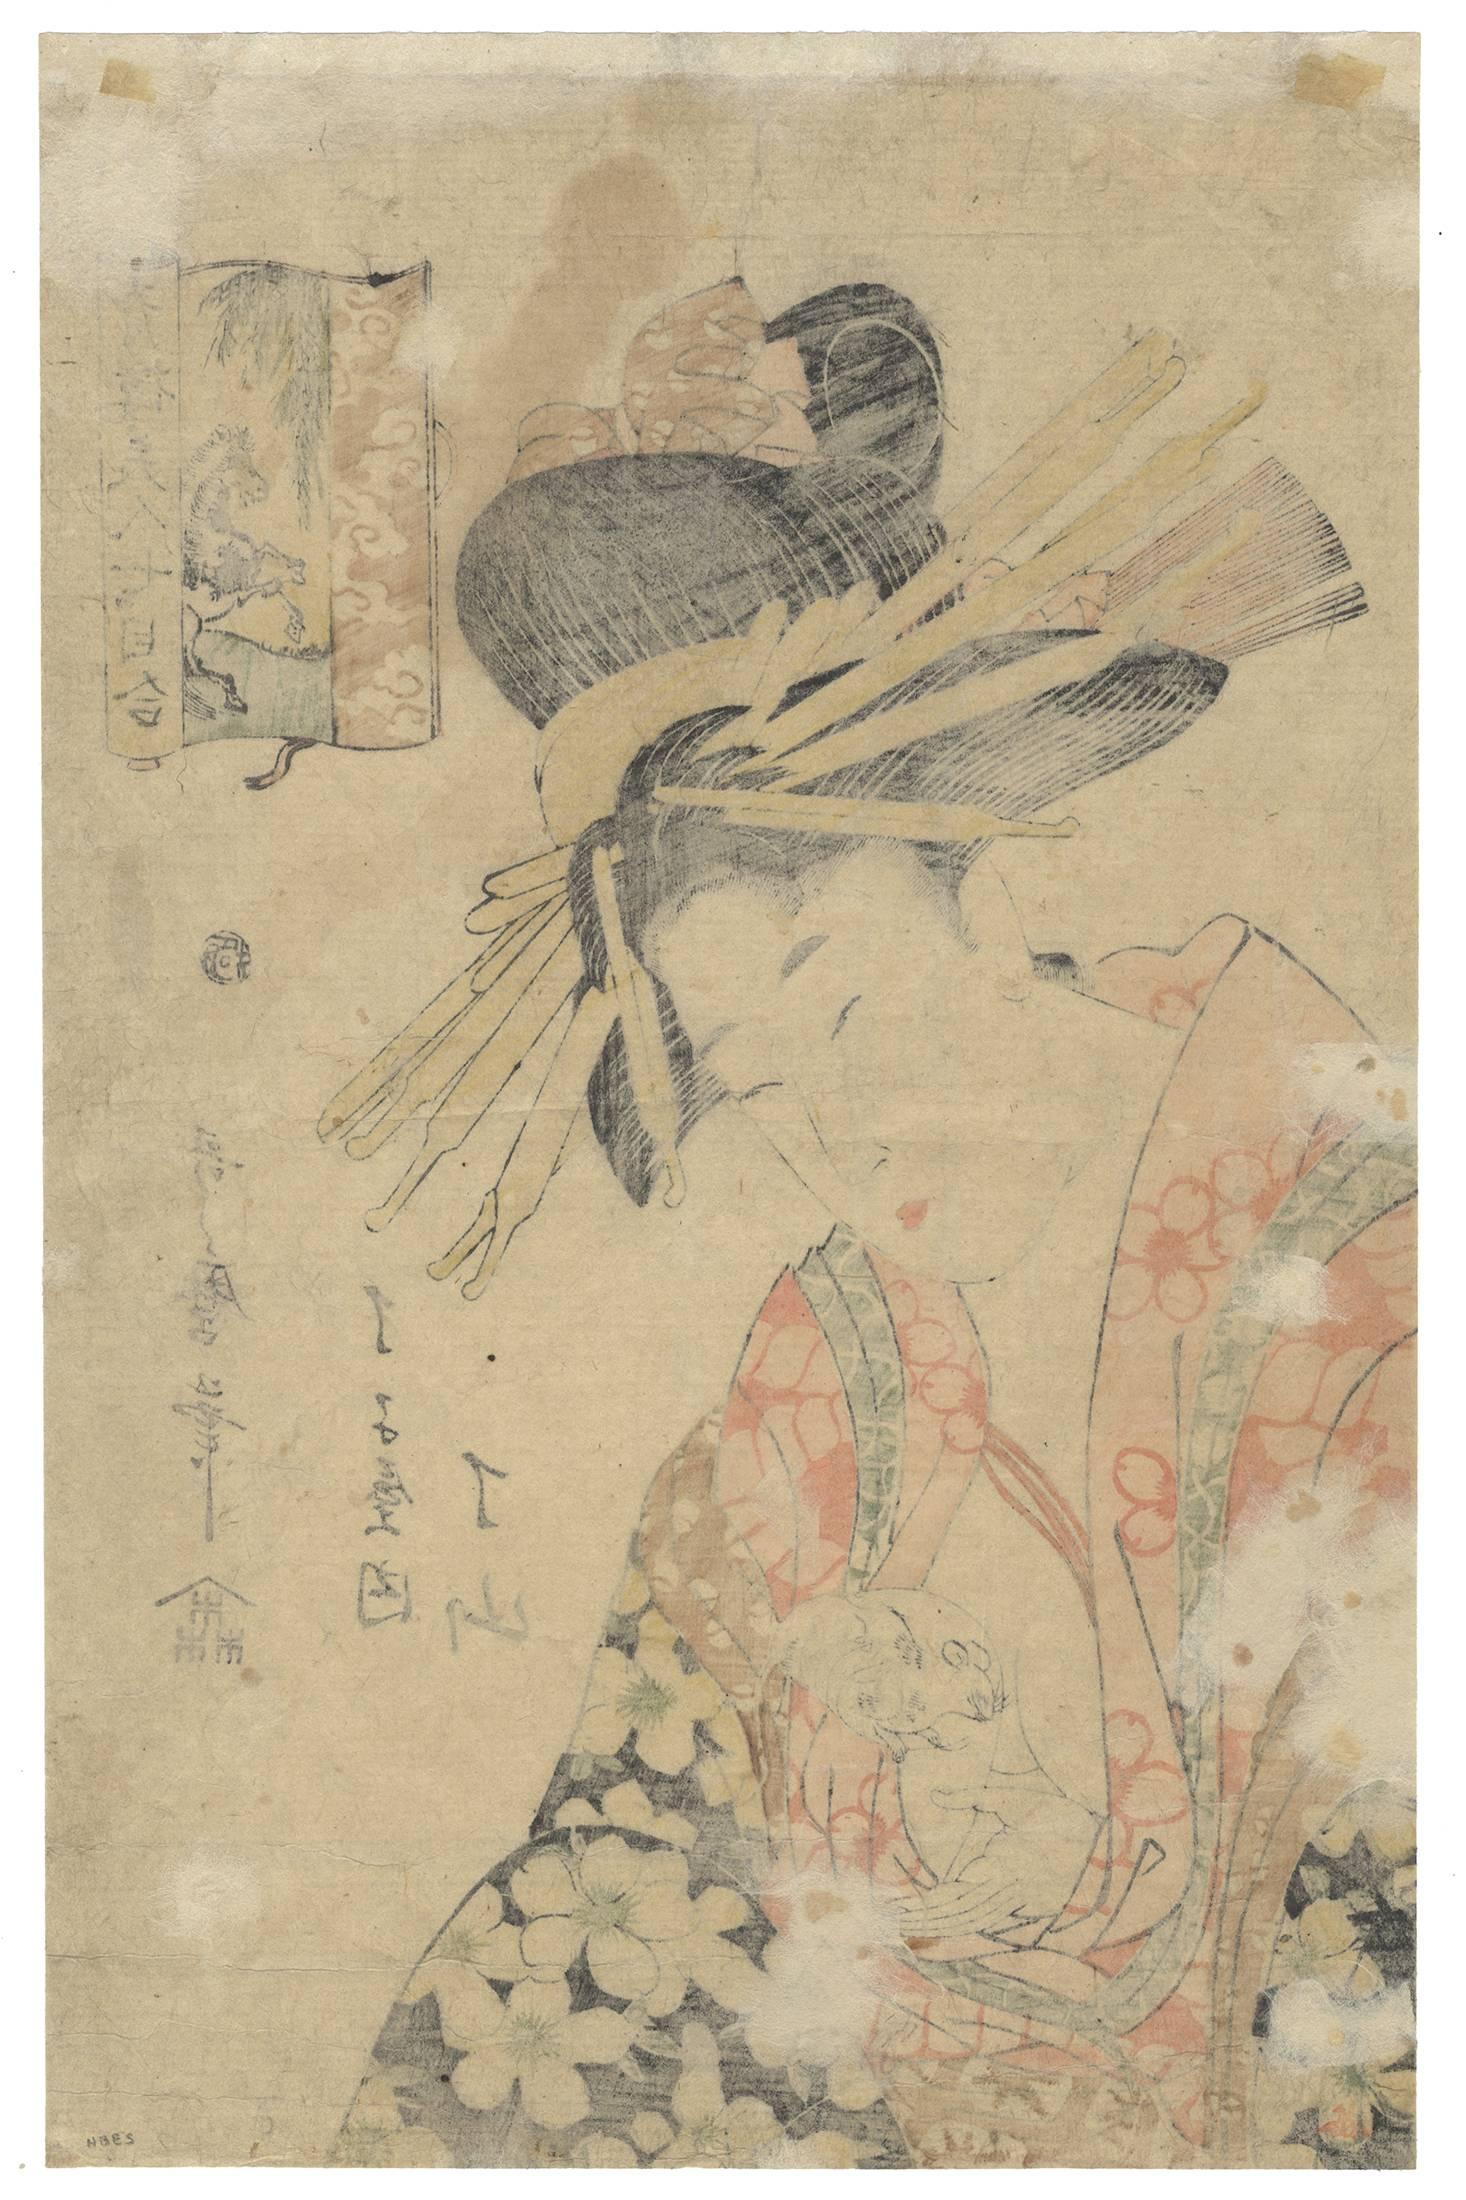 Title: A Courtesan Holding A Mouse
Artist: Utamaro I Kitagawa. Singed as Utamaro Hitsu. (1753 - 1806)
Series: Seiro Bijin Nanatsume Awase
Publisher: Moriya Jihei
Published in 1791-1804.

This print shows a young courtesan, wearing an open kimono and